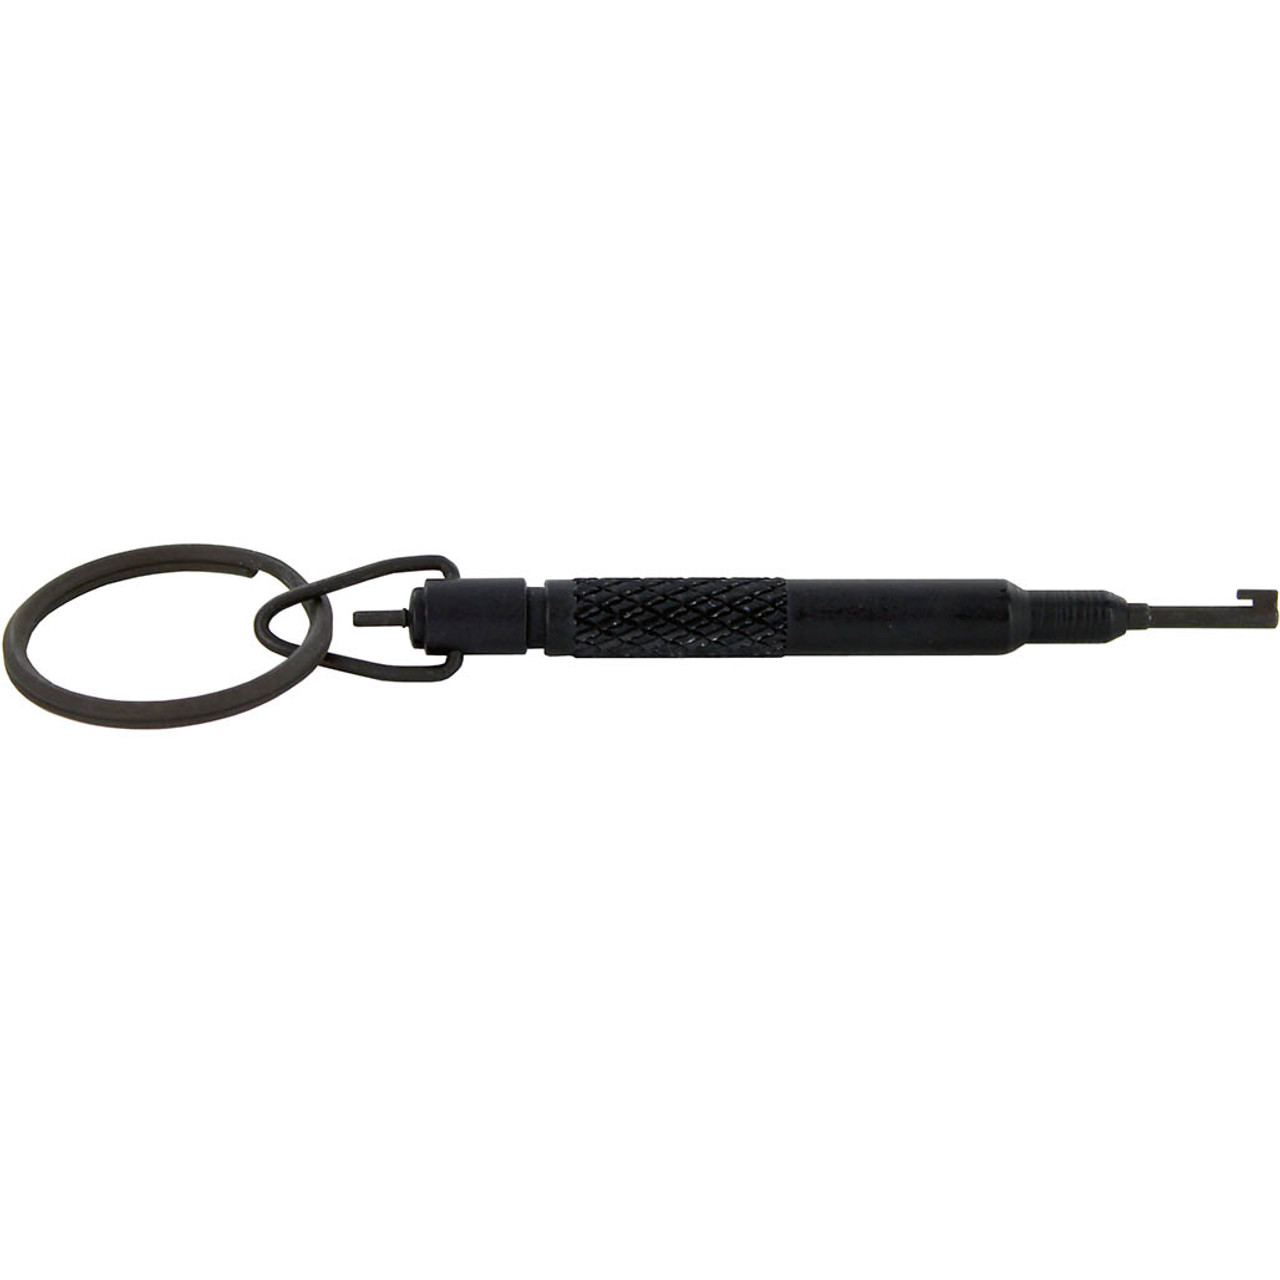 Zak Tool #11-LG-104 Key for S&W Model 104 Handcuffs